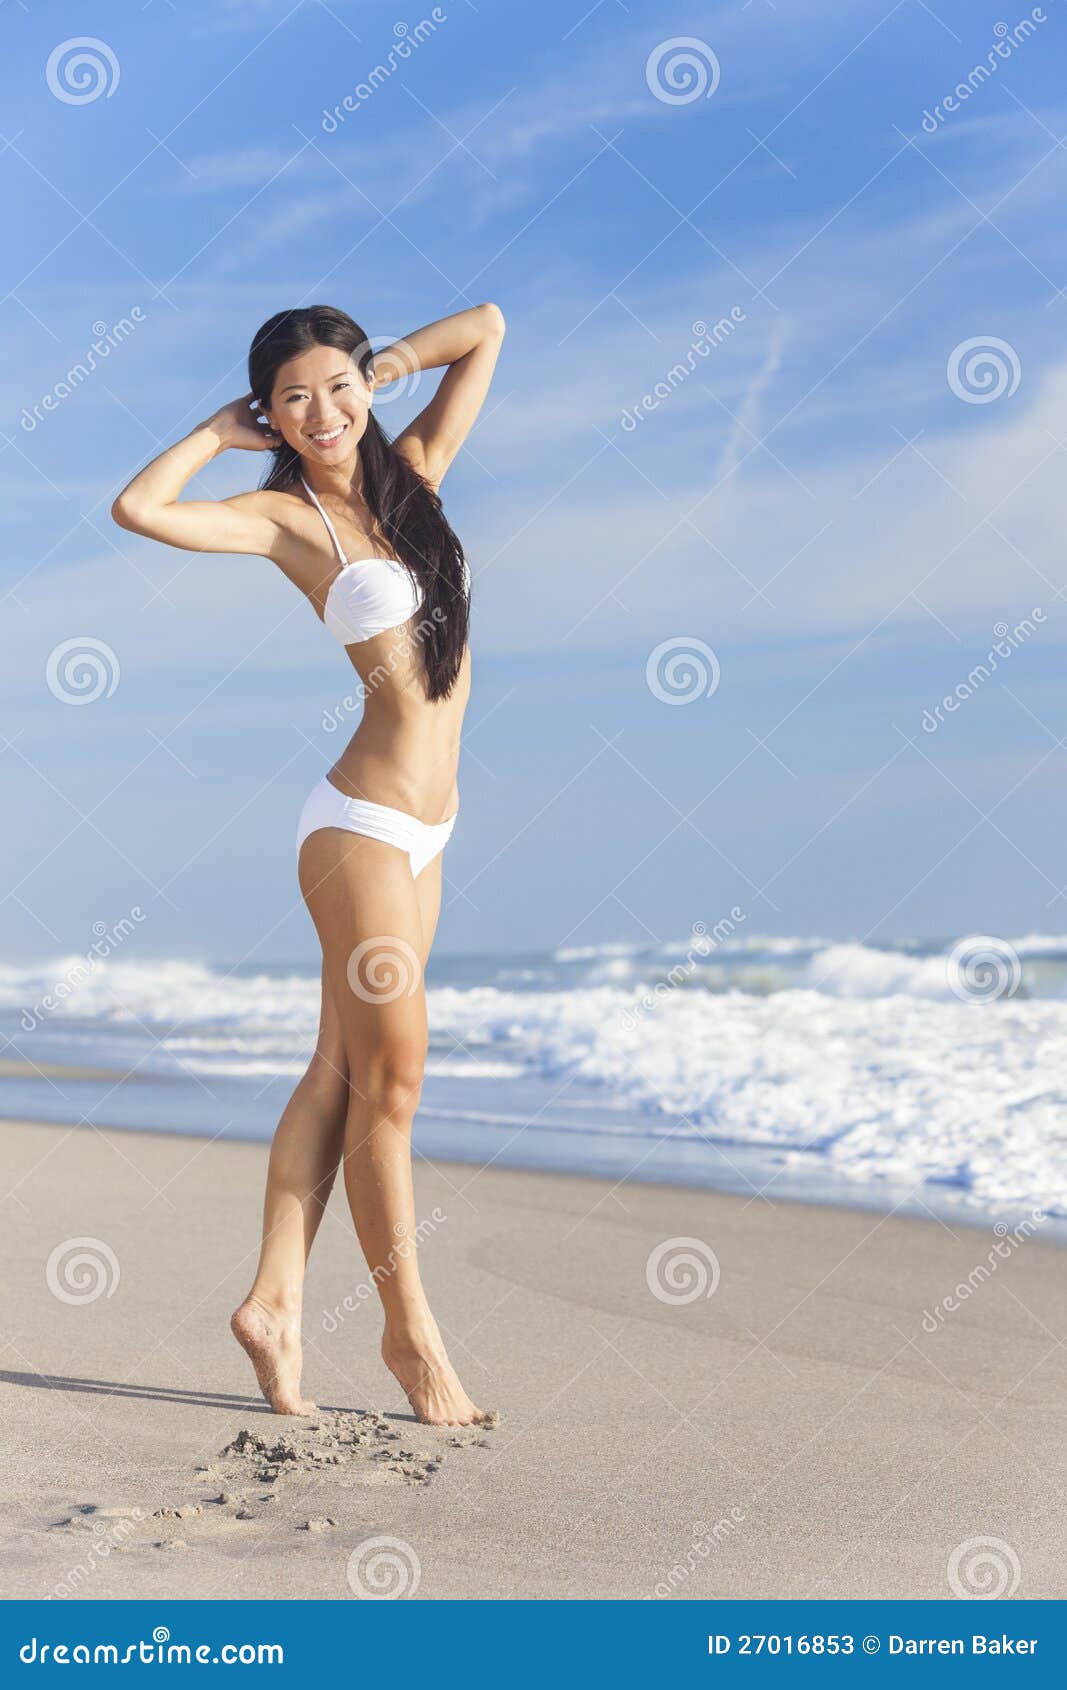 asian girl nudist beach